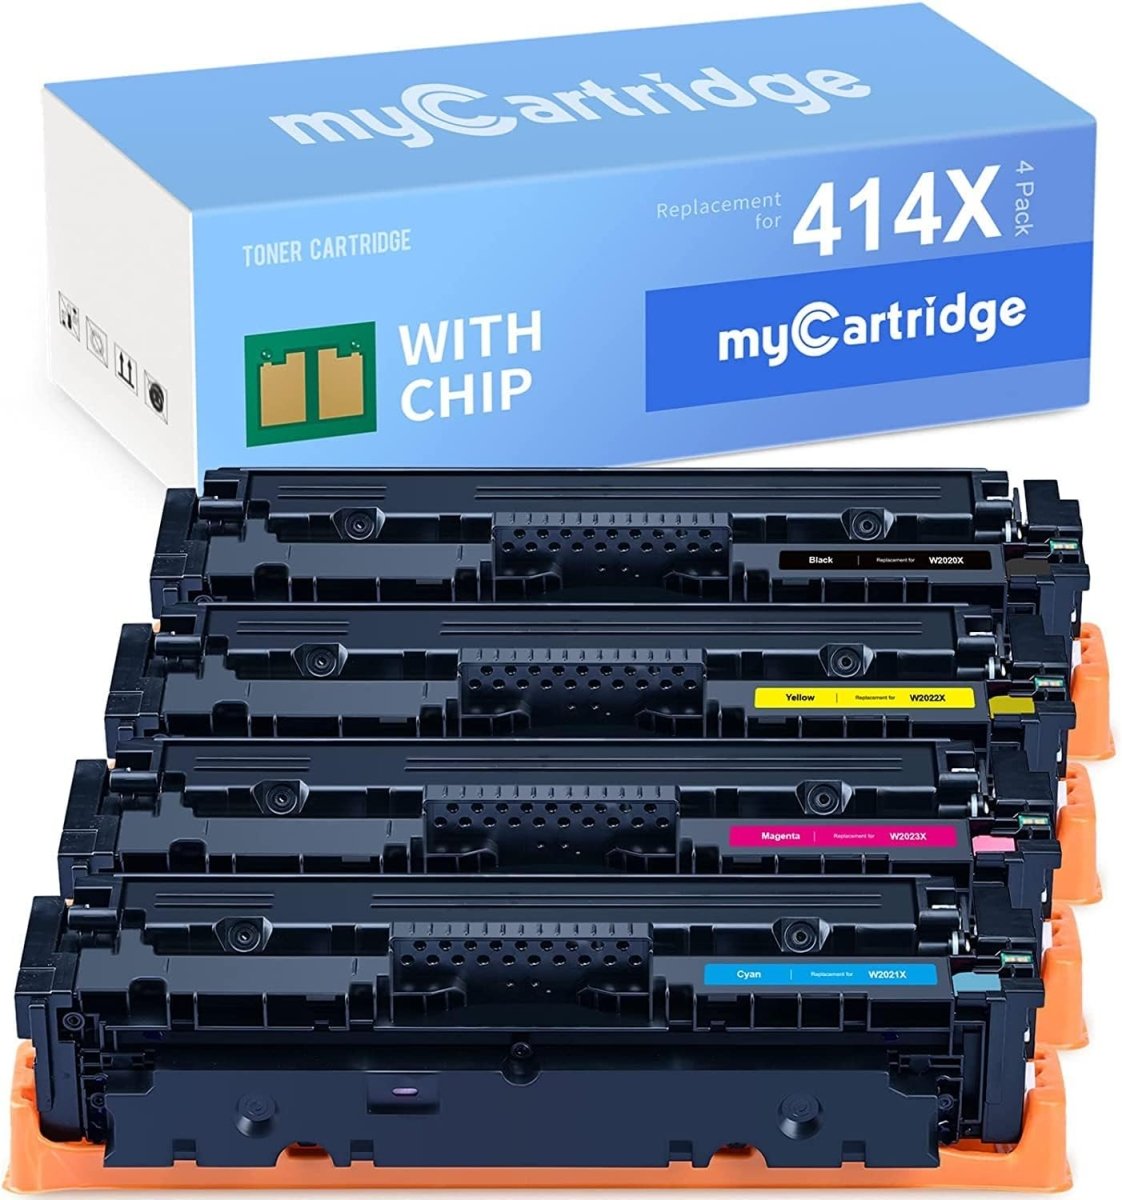 414X Toner Cartridges 4 Pack High Yield Remanufactured for HP Jet Pro (Black Cyan Yellow Magenta) - Linford Office:Printer Ink & Toner Cartridge